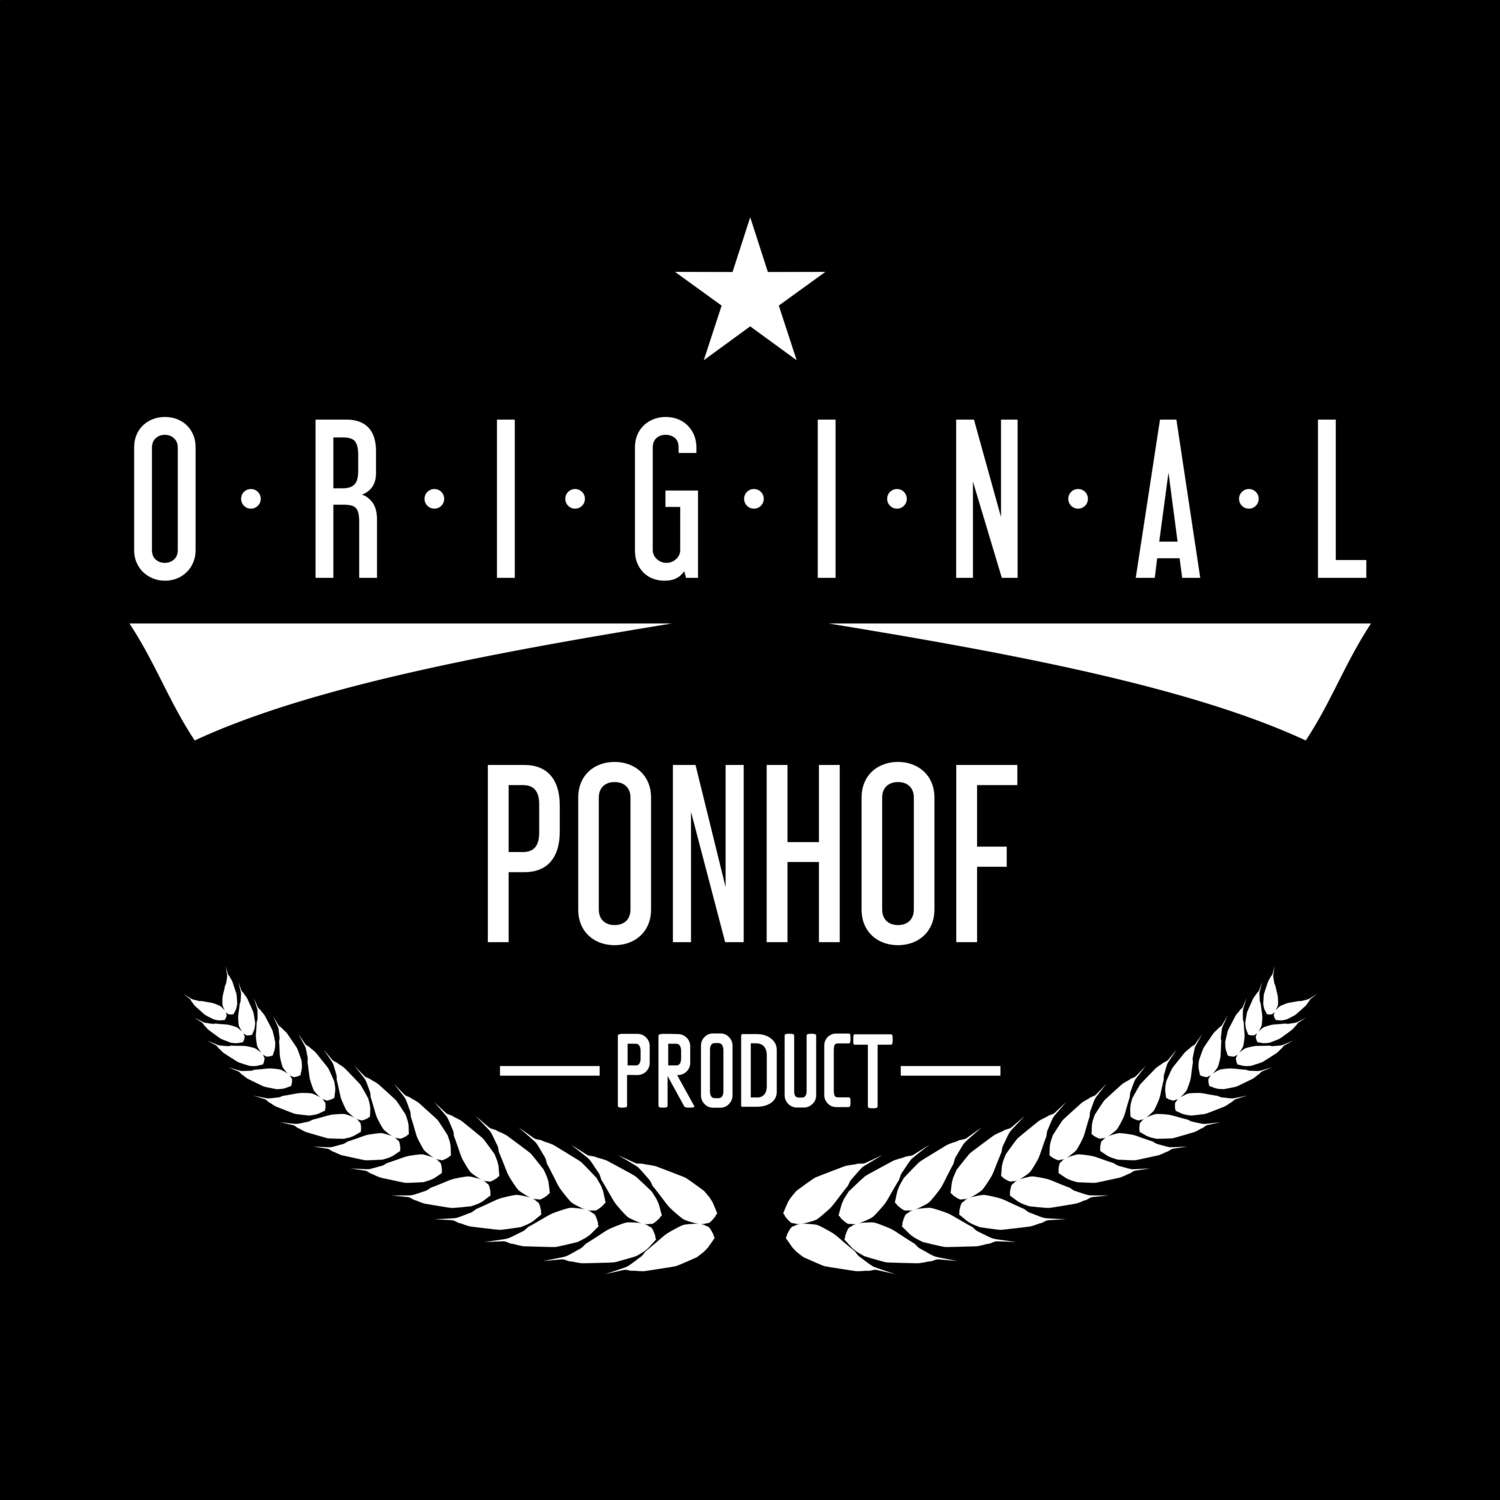 Ponhof T-Shirt »Original Product«